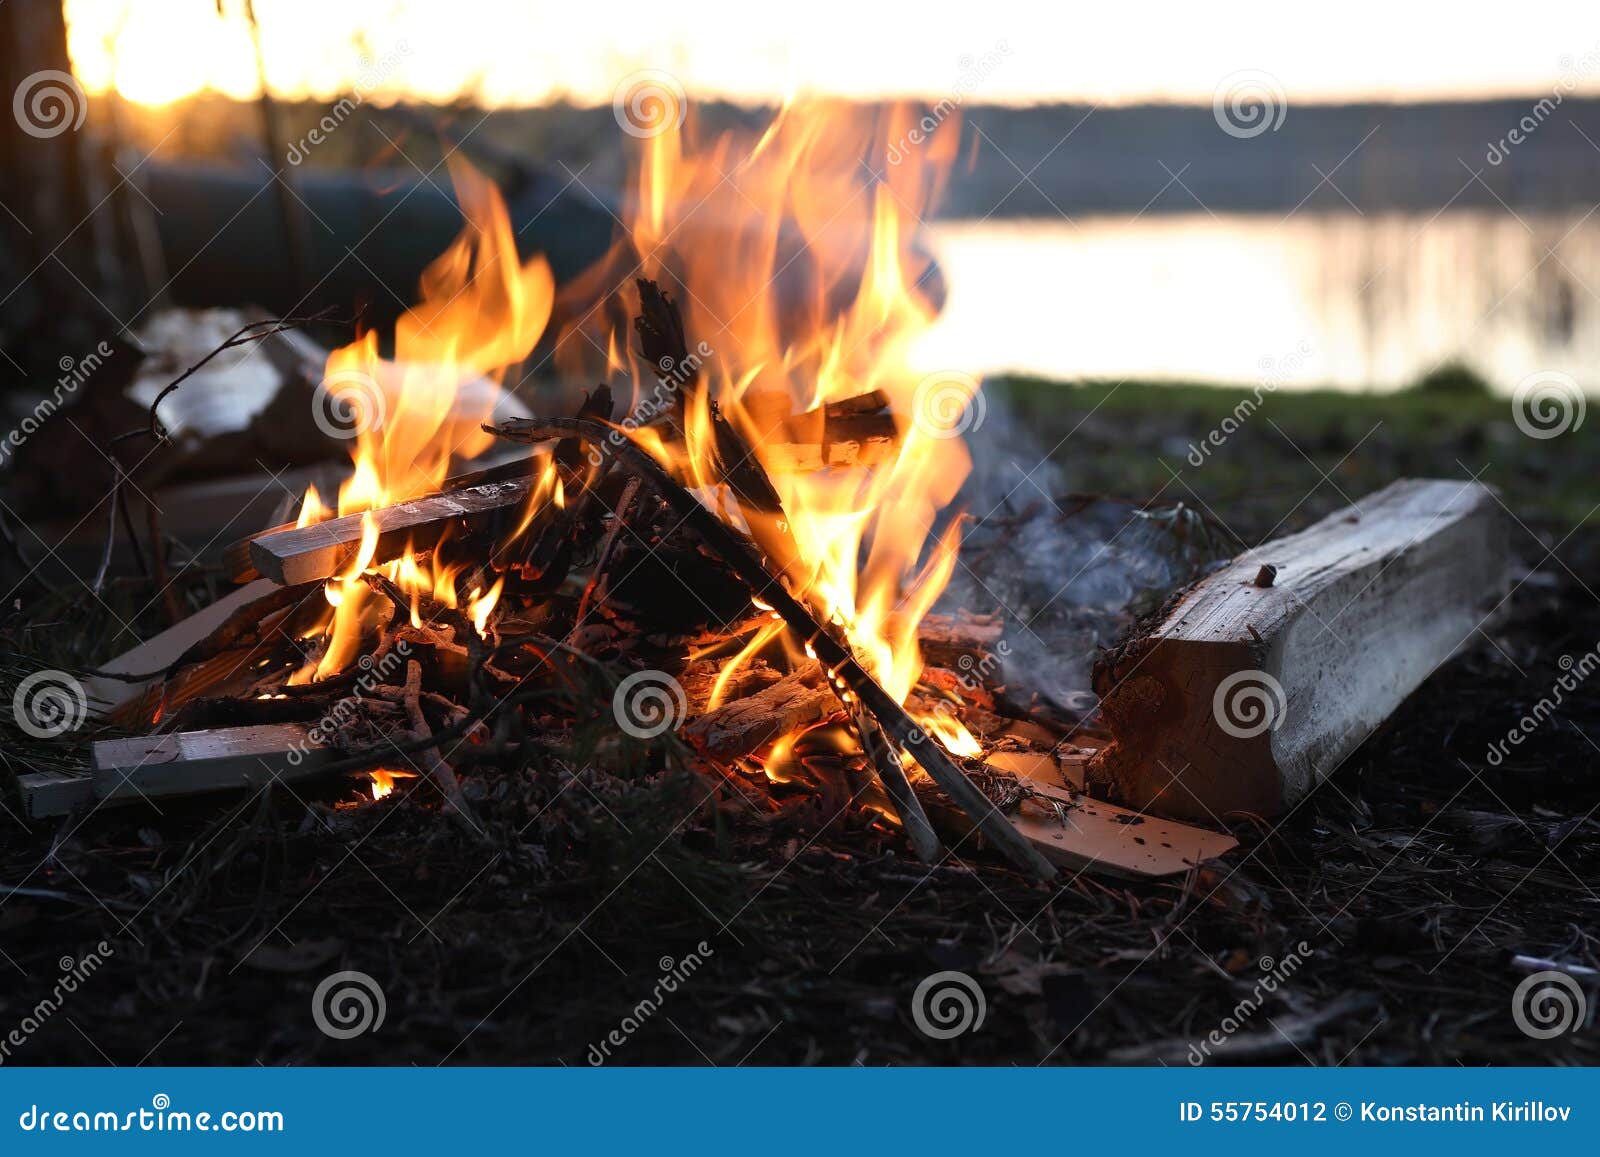 Camp-Fire Near Lake stock photo. Image of wood, camping - 55754012